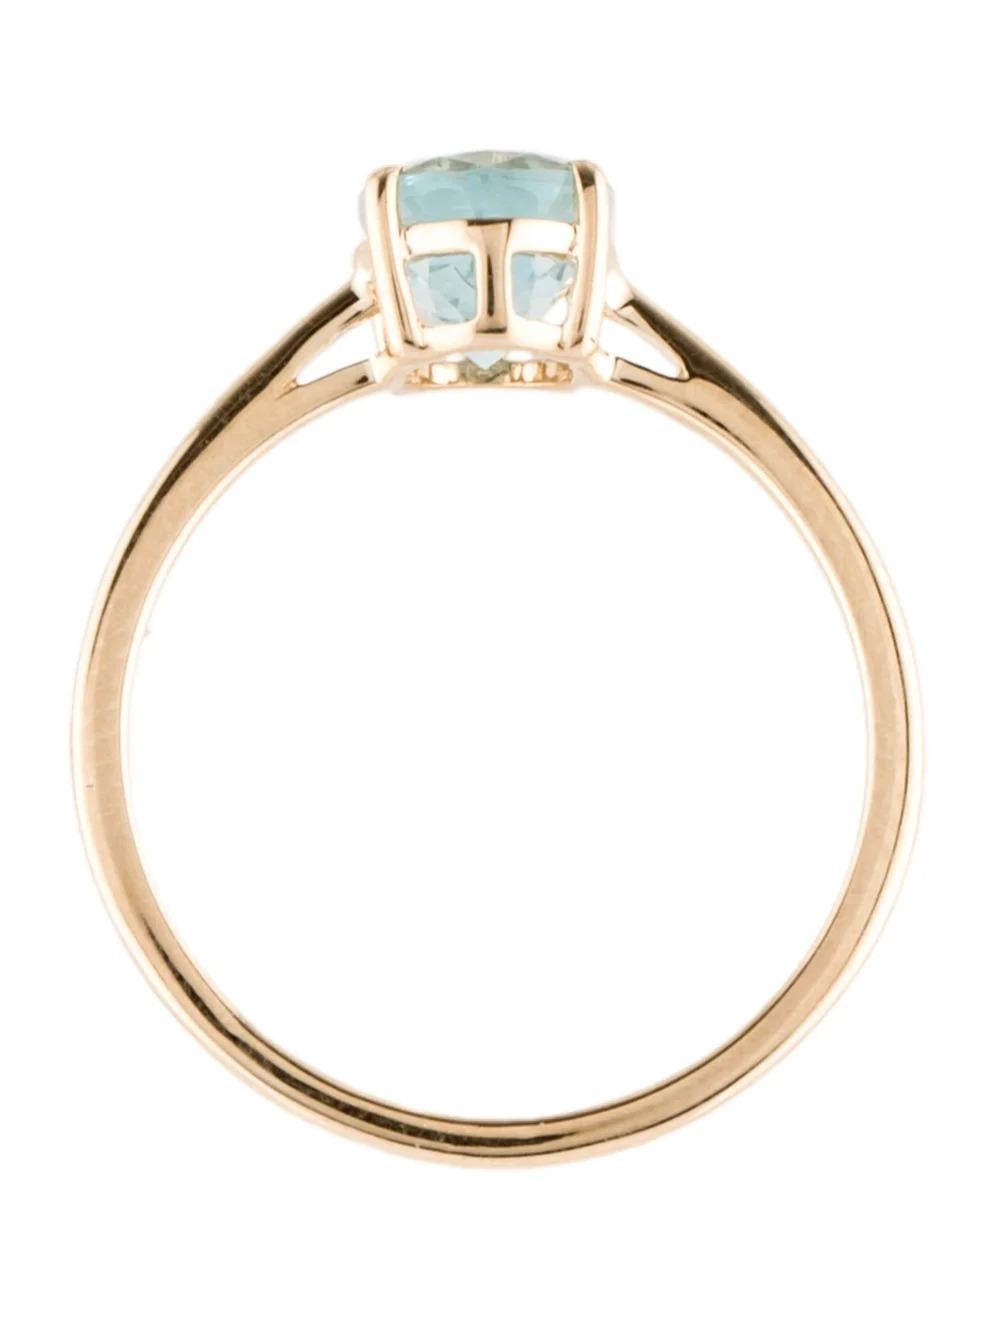 Women's 14K Aquamarine Cocktail Ring, Size 6.75 - Blue Gemstone, Elegant Design For Sale